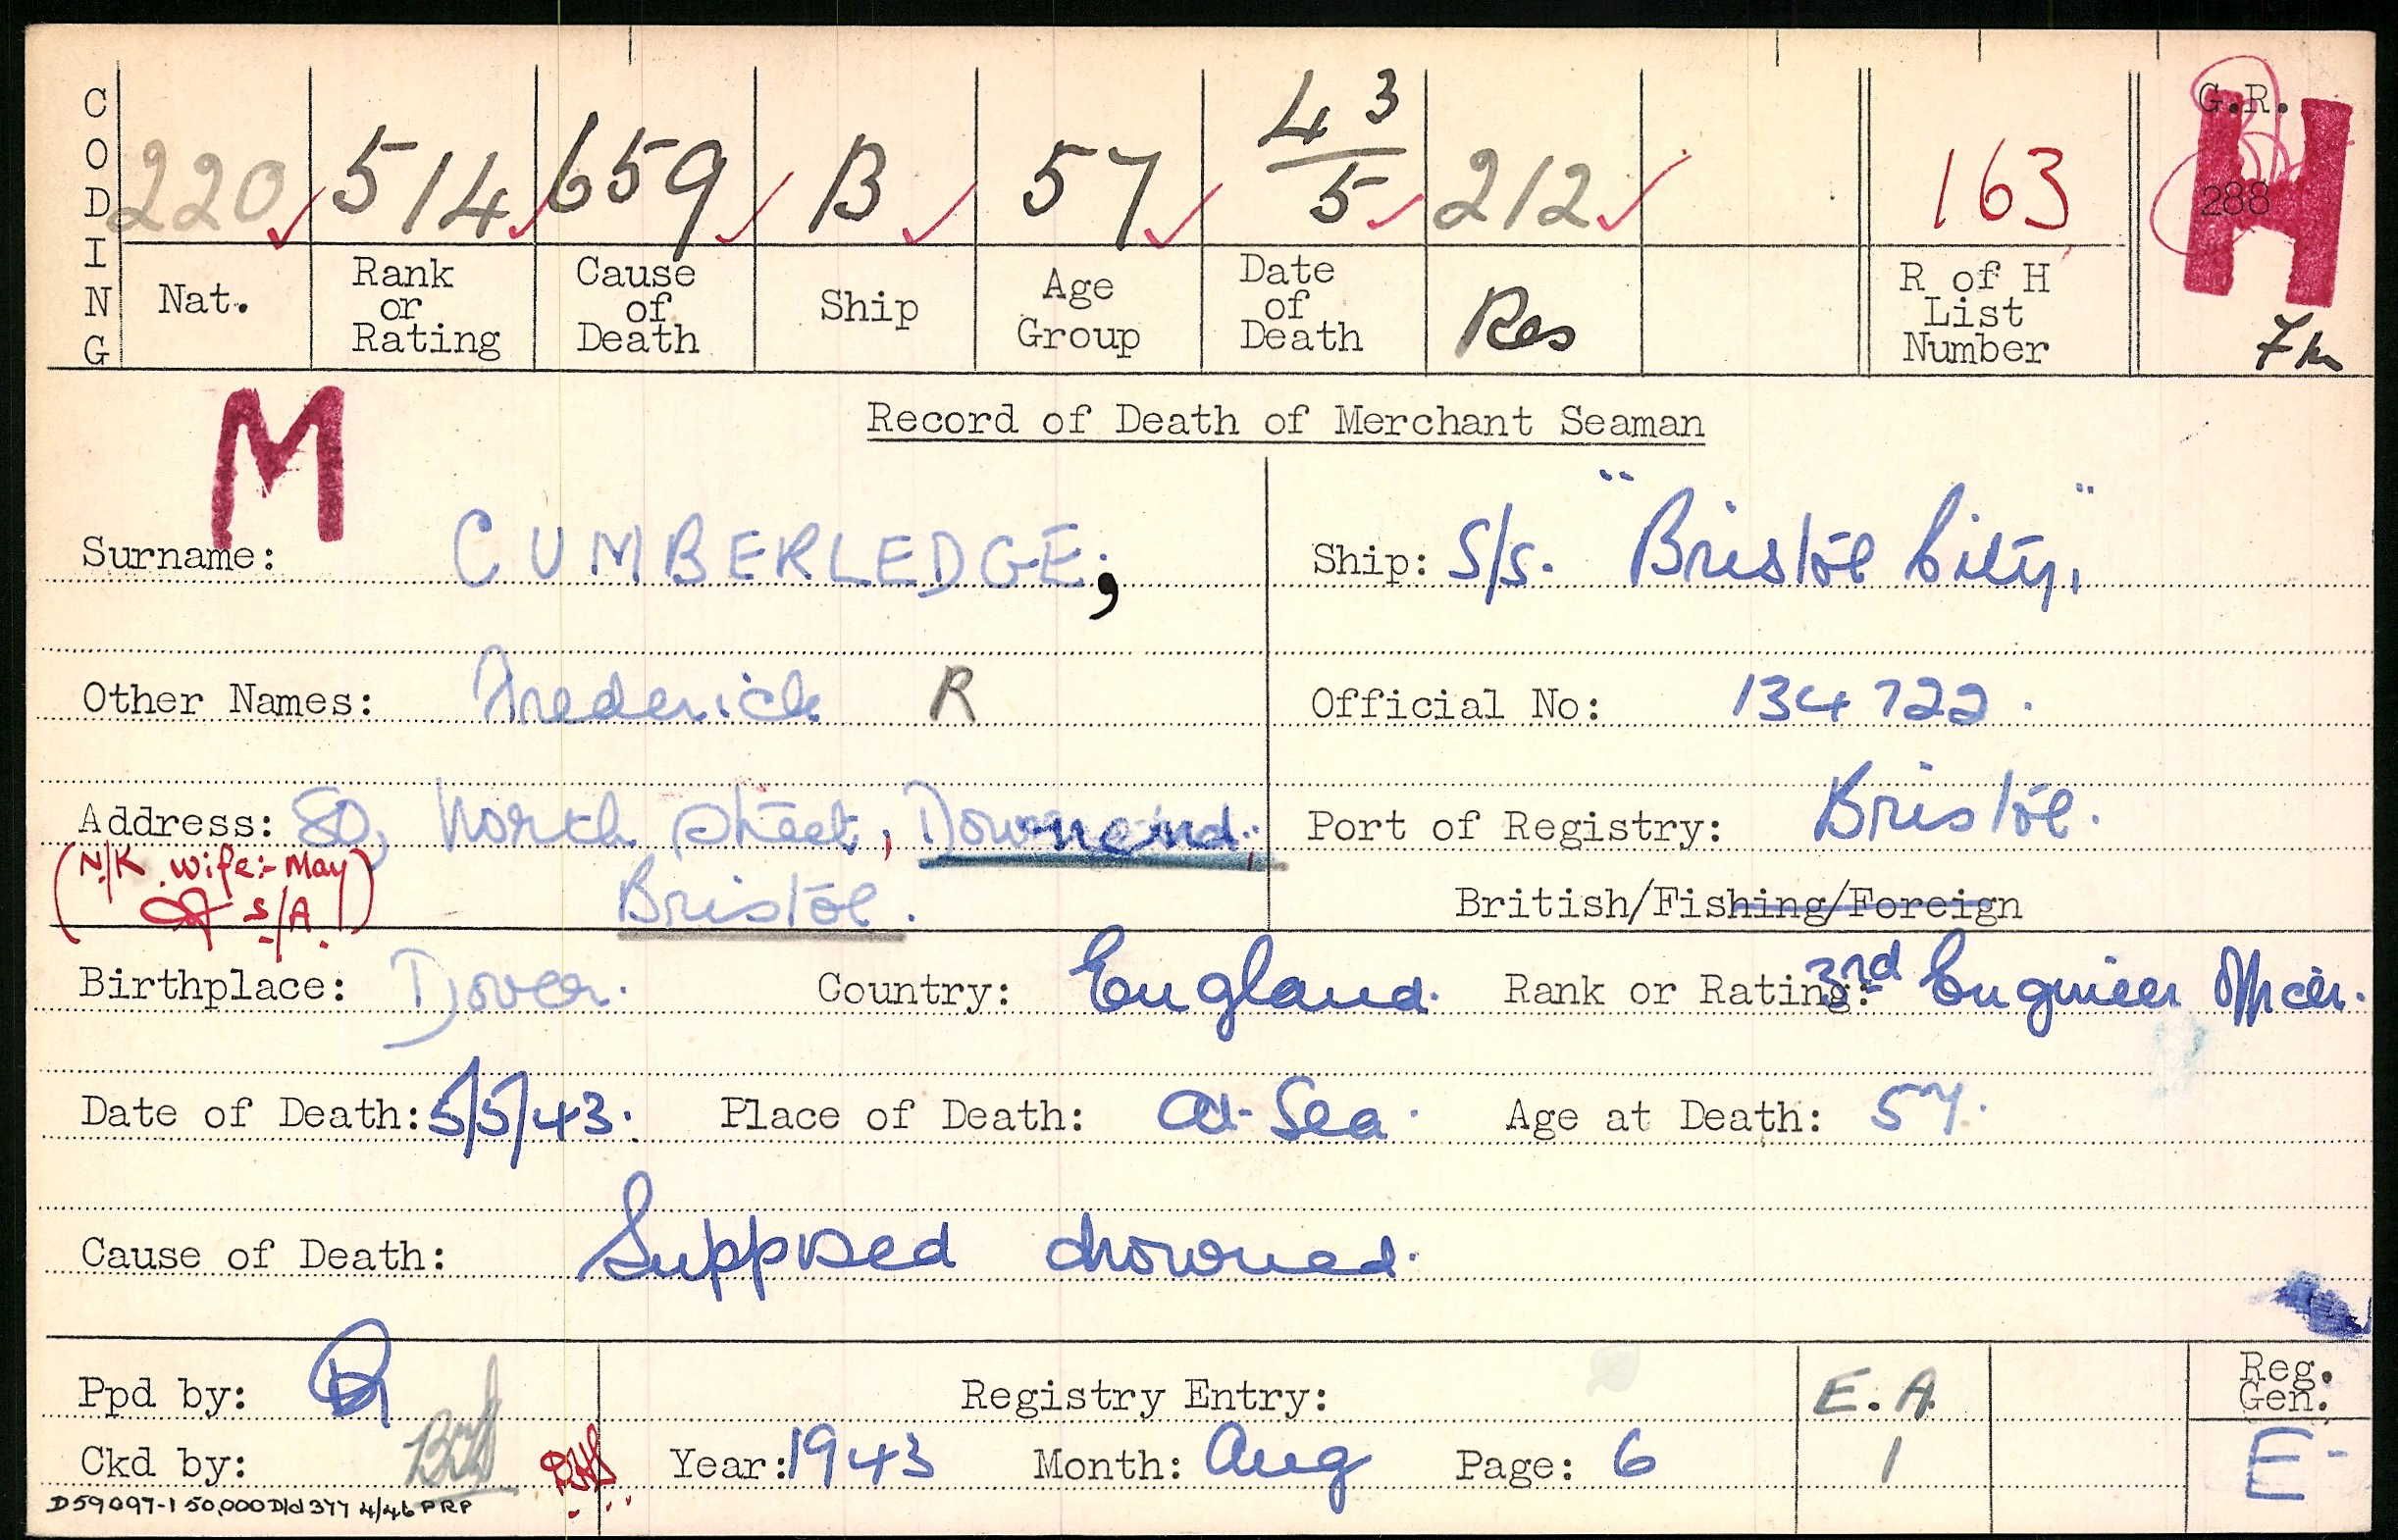 Frederick Robert Cumberledge's Report of Death of Merchant Seaman Card